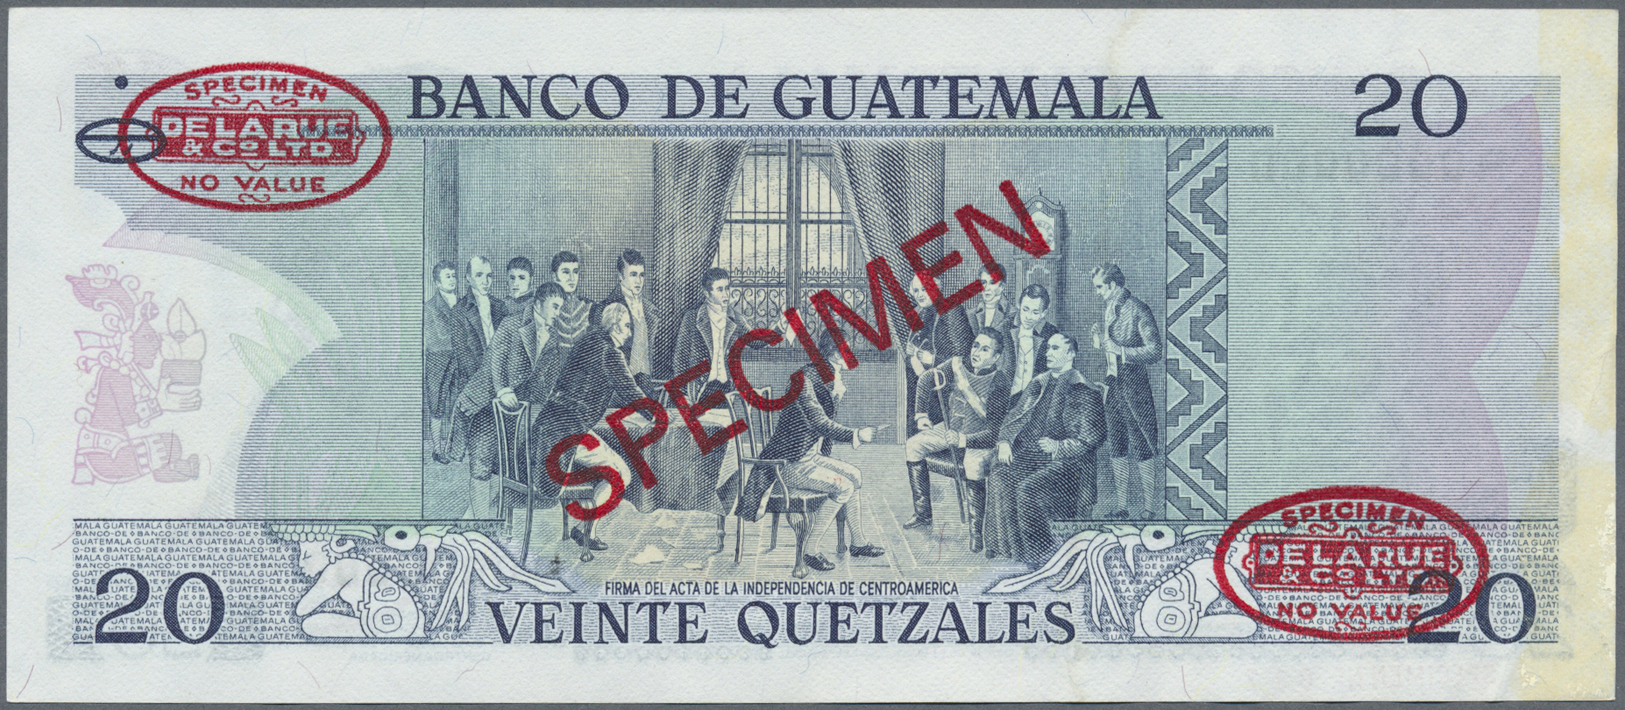 00966 Guatemala: 20 Quetzales 1972-83 SPECIMEN, P.62s With Two Oval Stampa "Specimen-no Value De La Rua & Co Ltd" At Upp - Guatemala